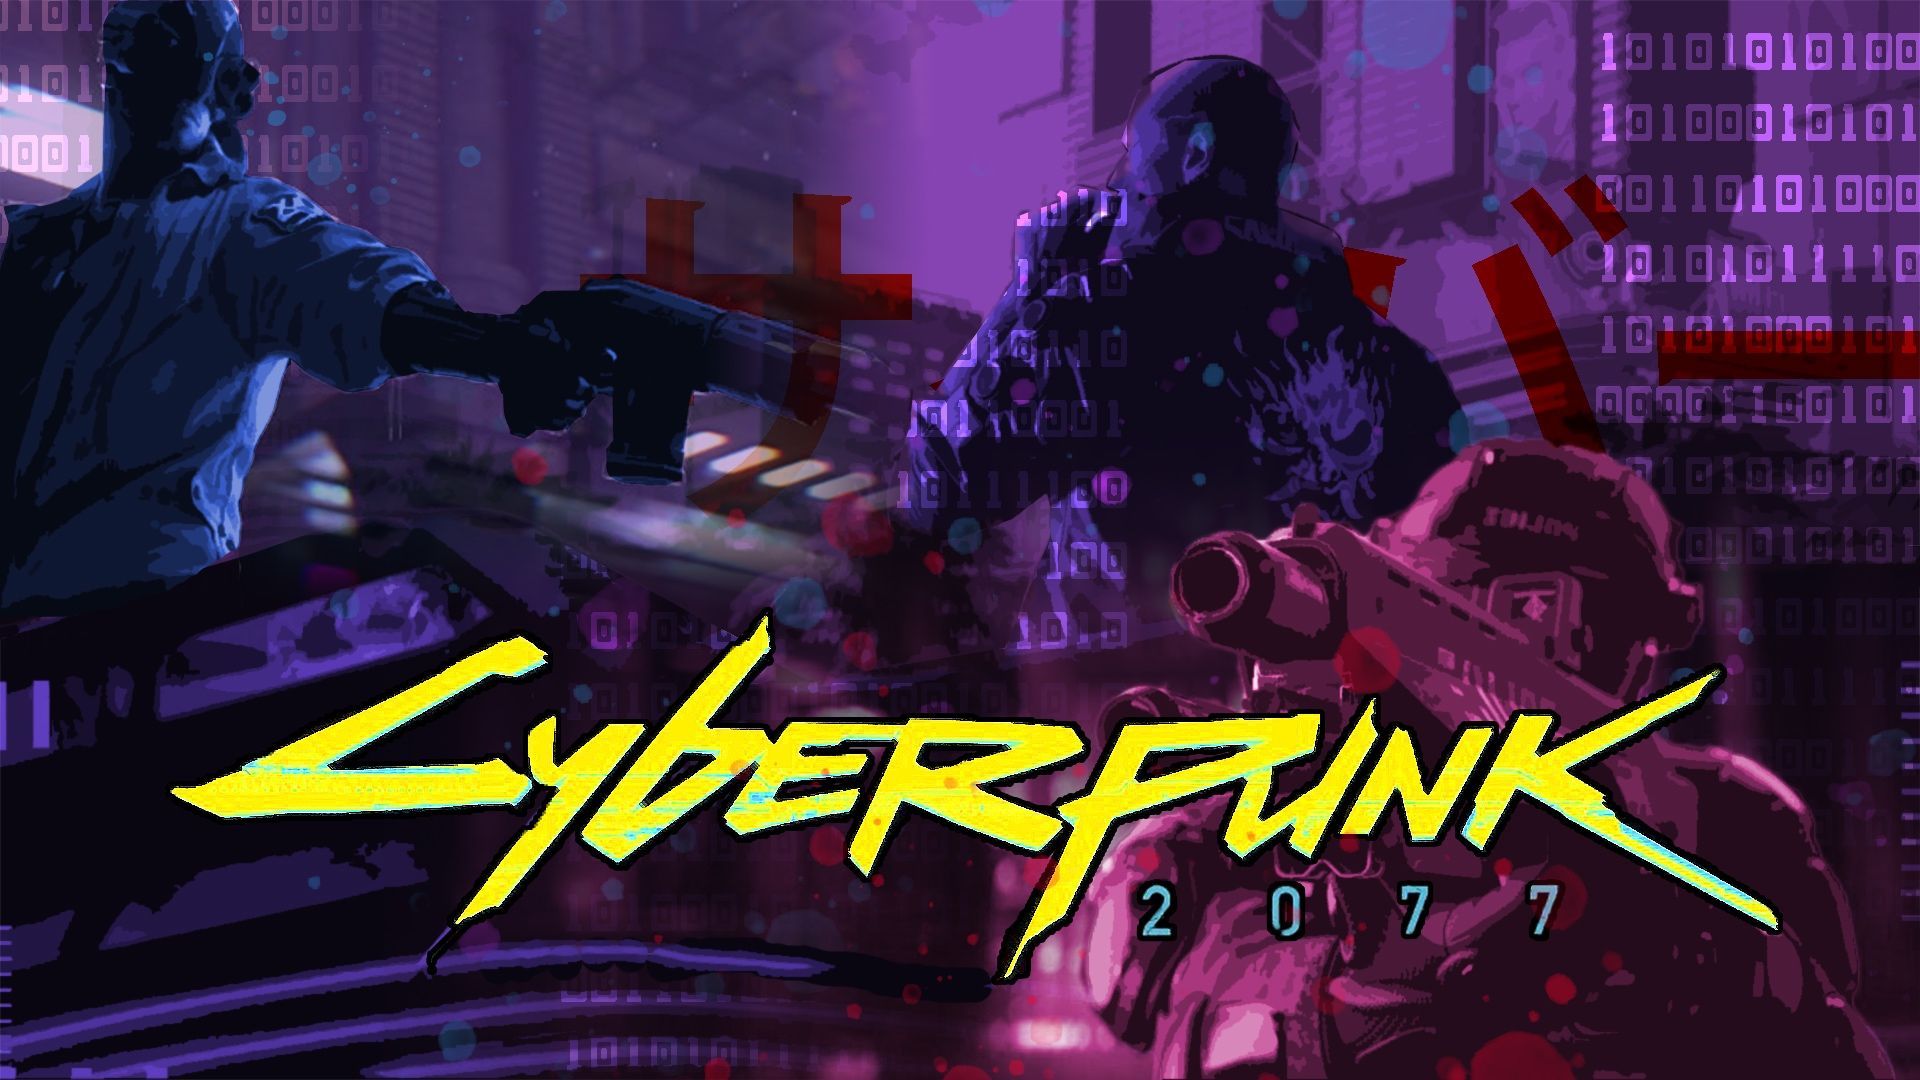 Free Download Cyberpunk 2077 4k Wallpaper Image